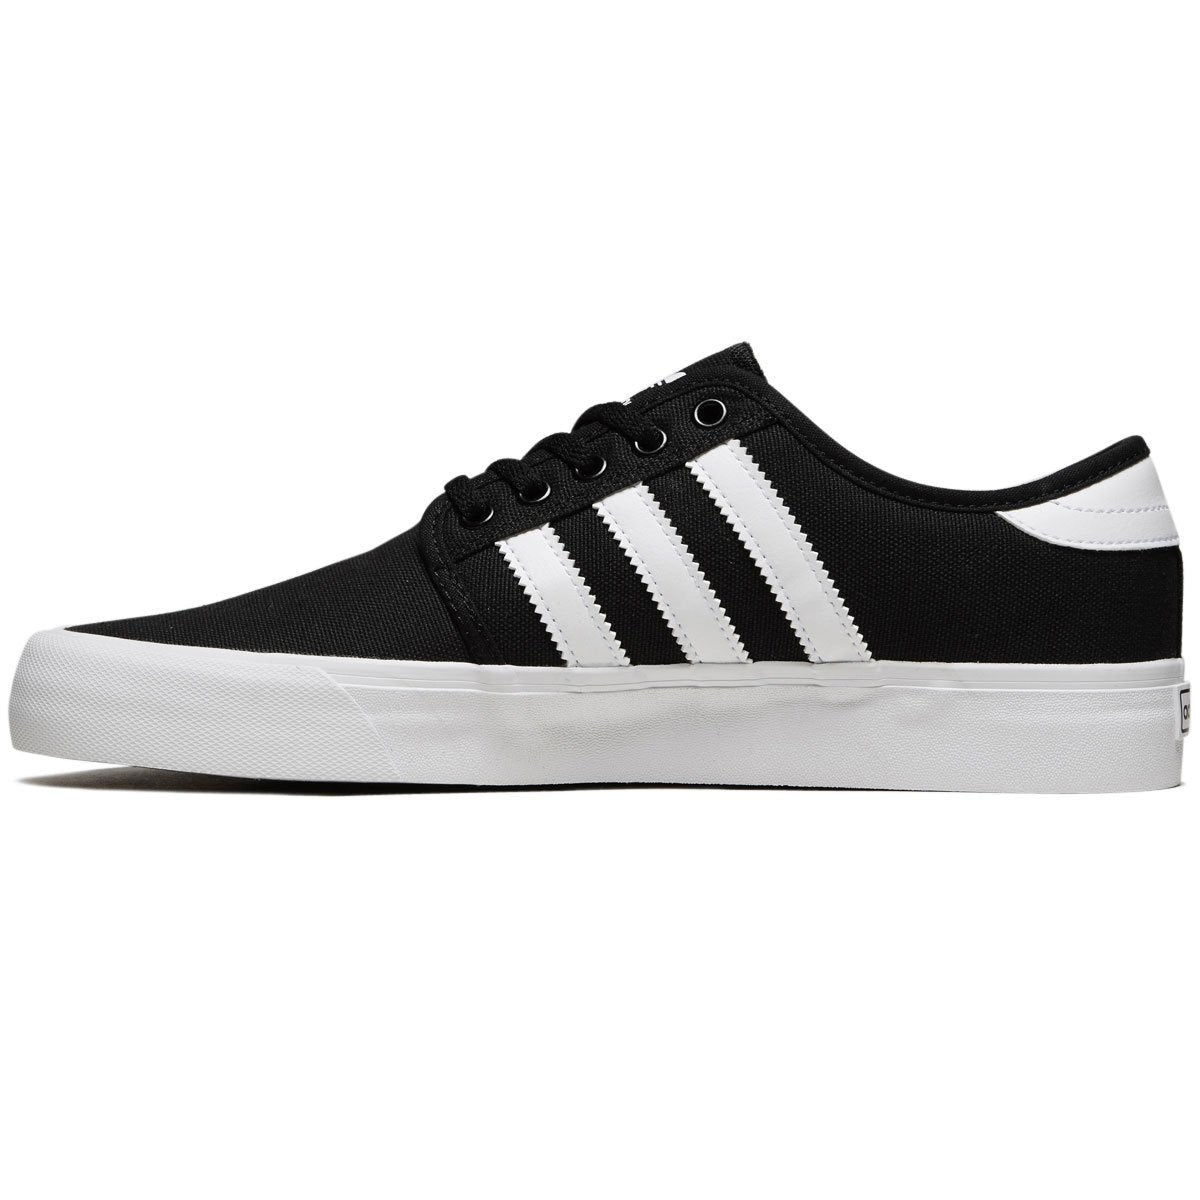 Adidas Seeley Xt Shoes - Core Black/White/White image 2